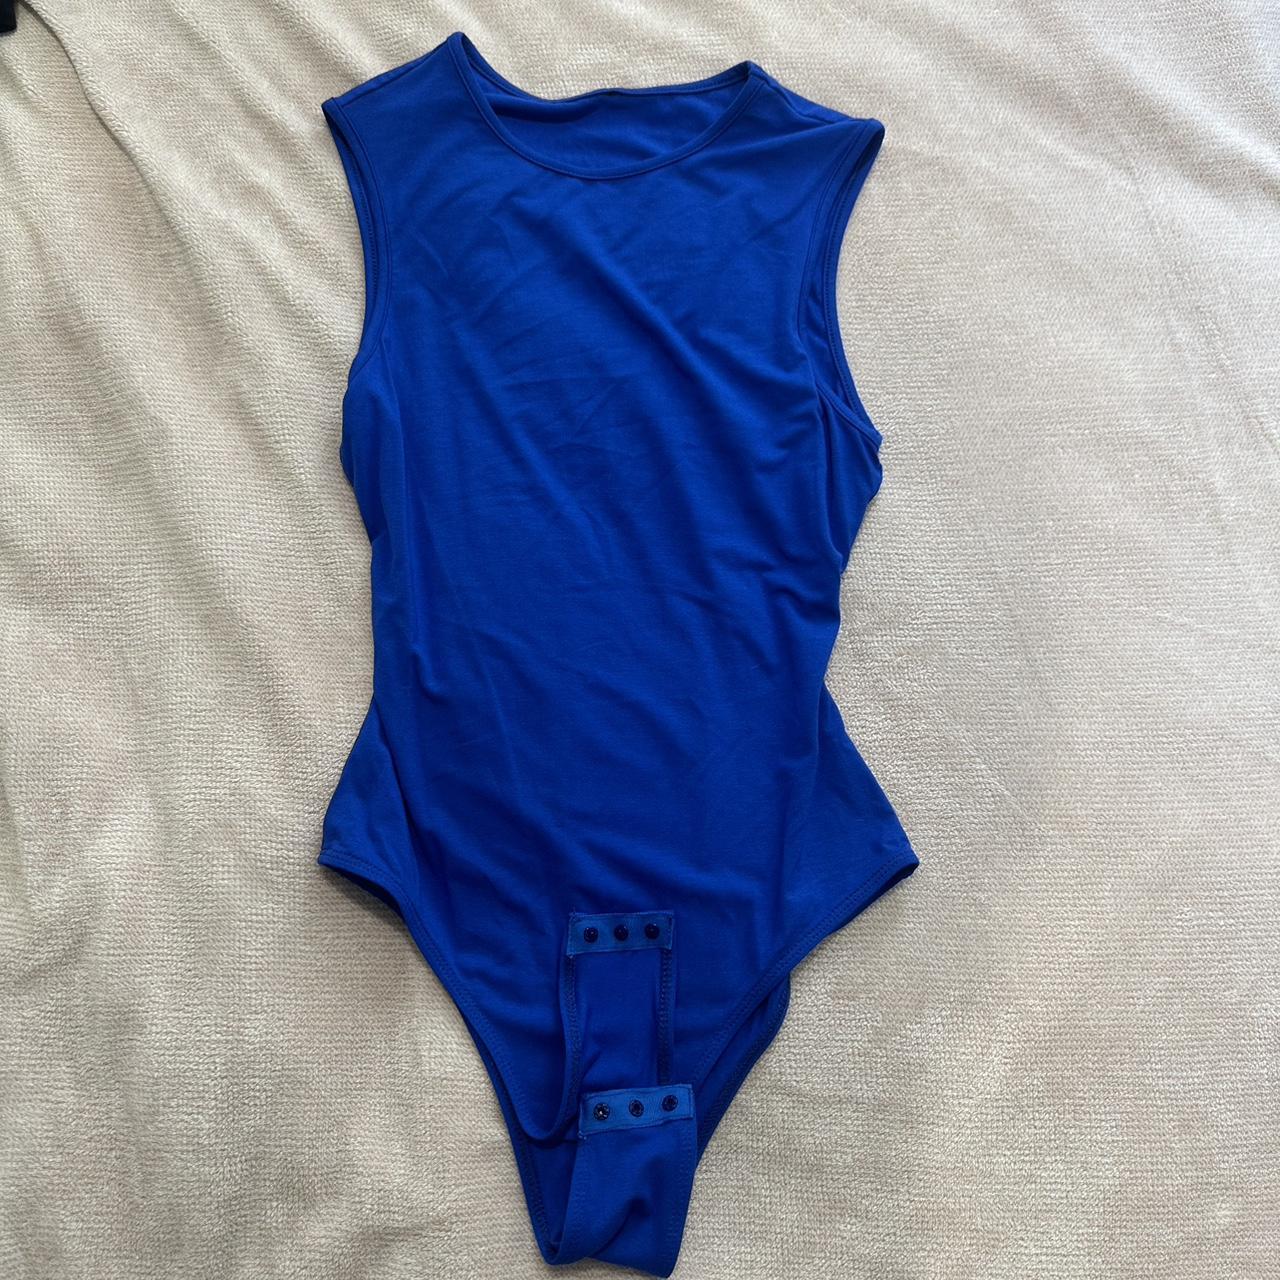 royal blue bodysuit 💤 - size s - never worn ... - Depop